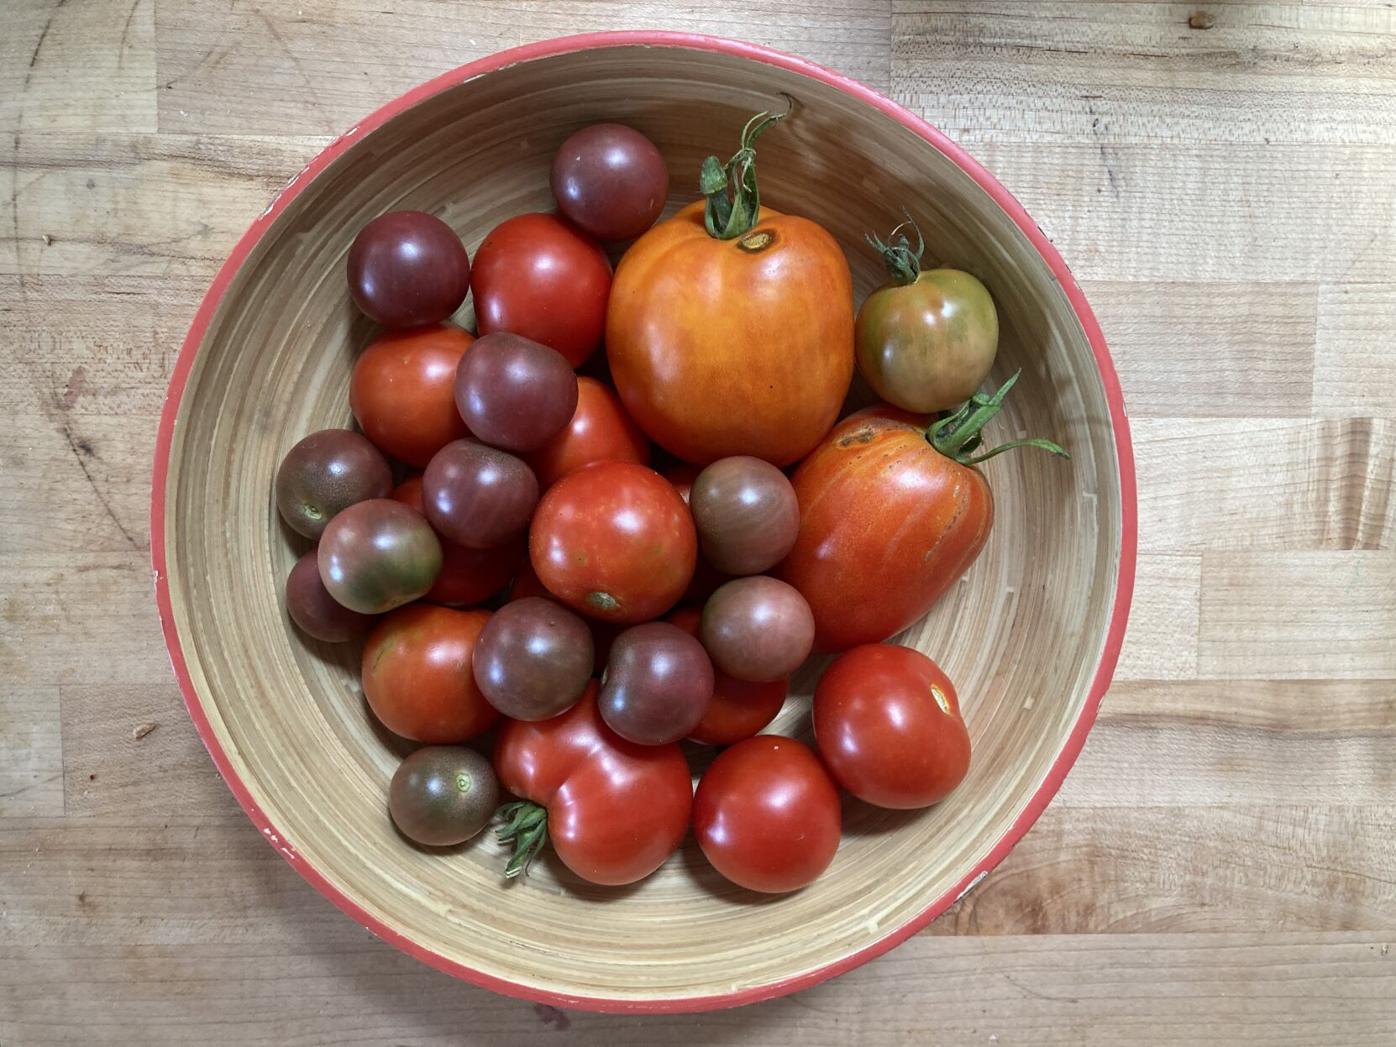 Tomato haul